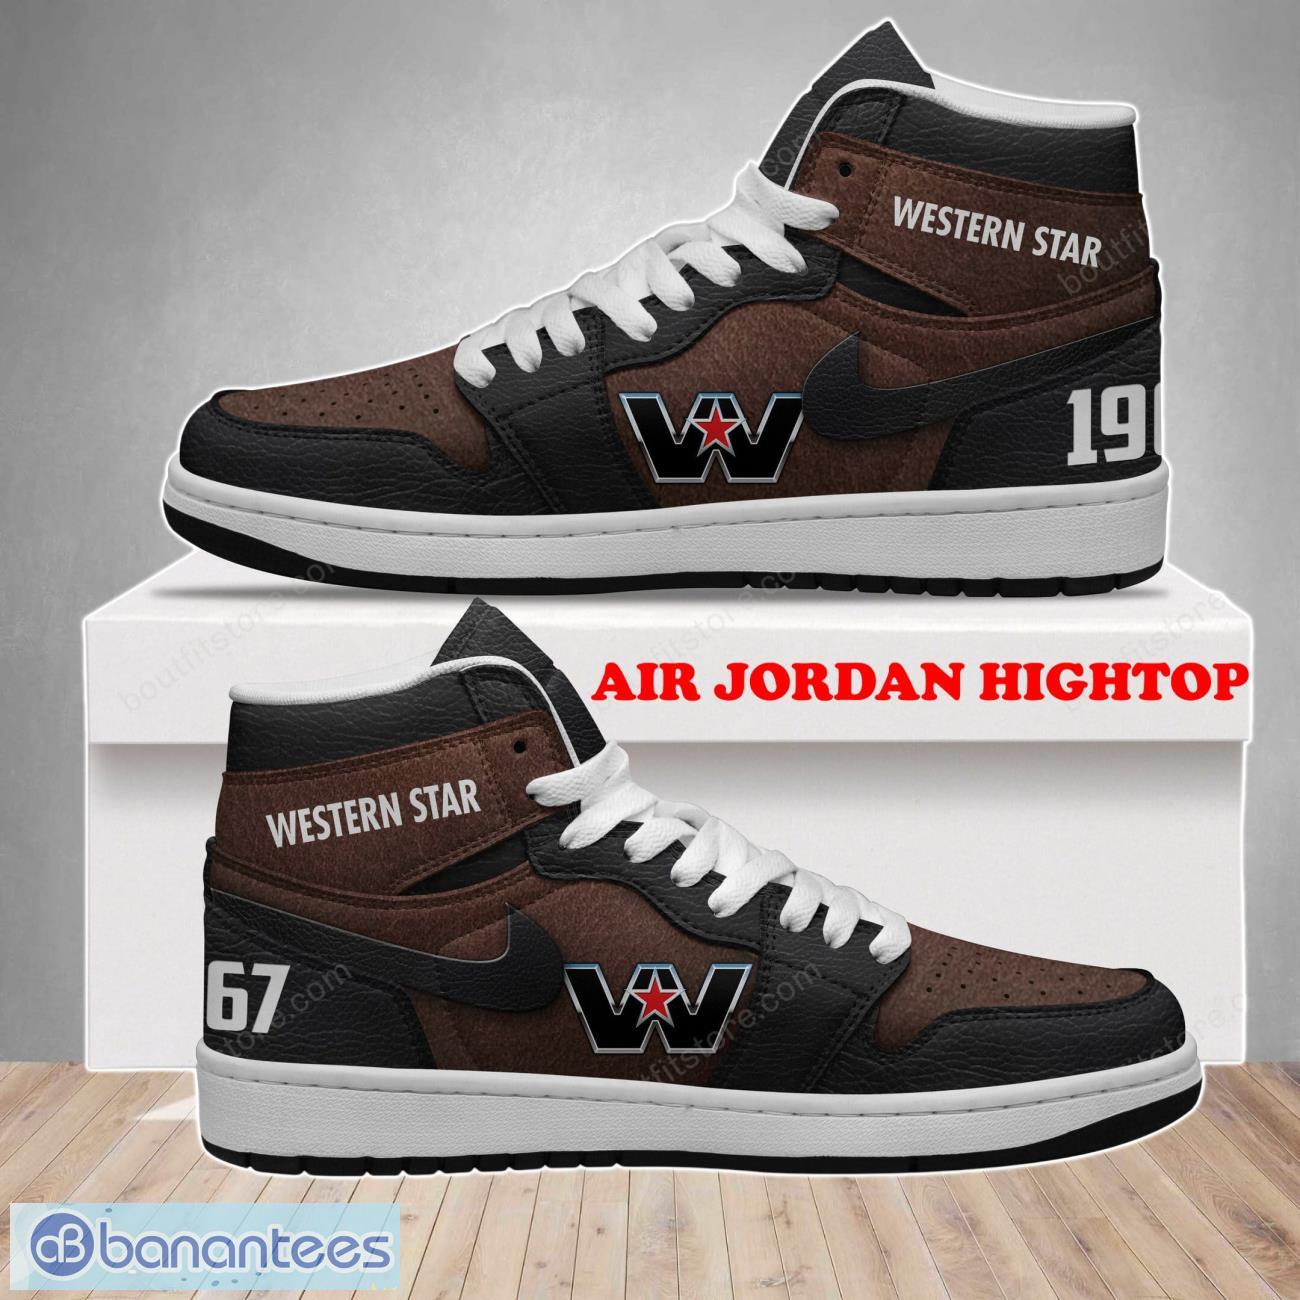 Western Star Air Jordan Hightop Classic Style For Men Women Product Photo 1